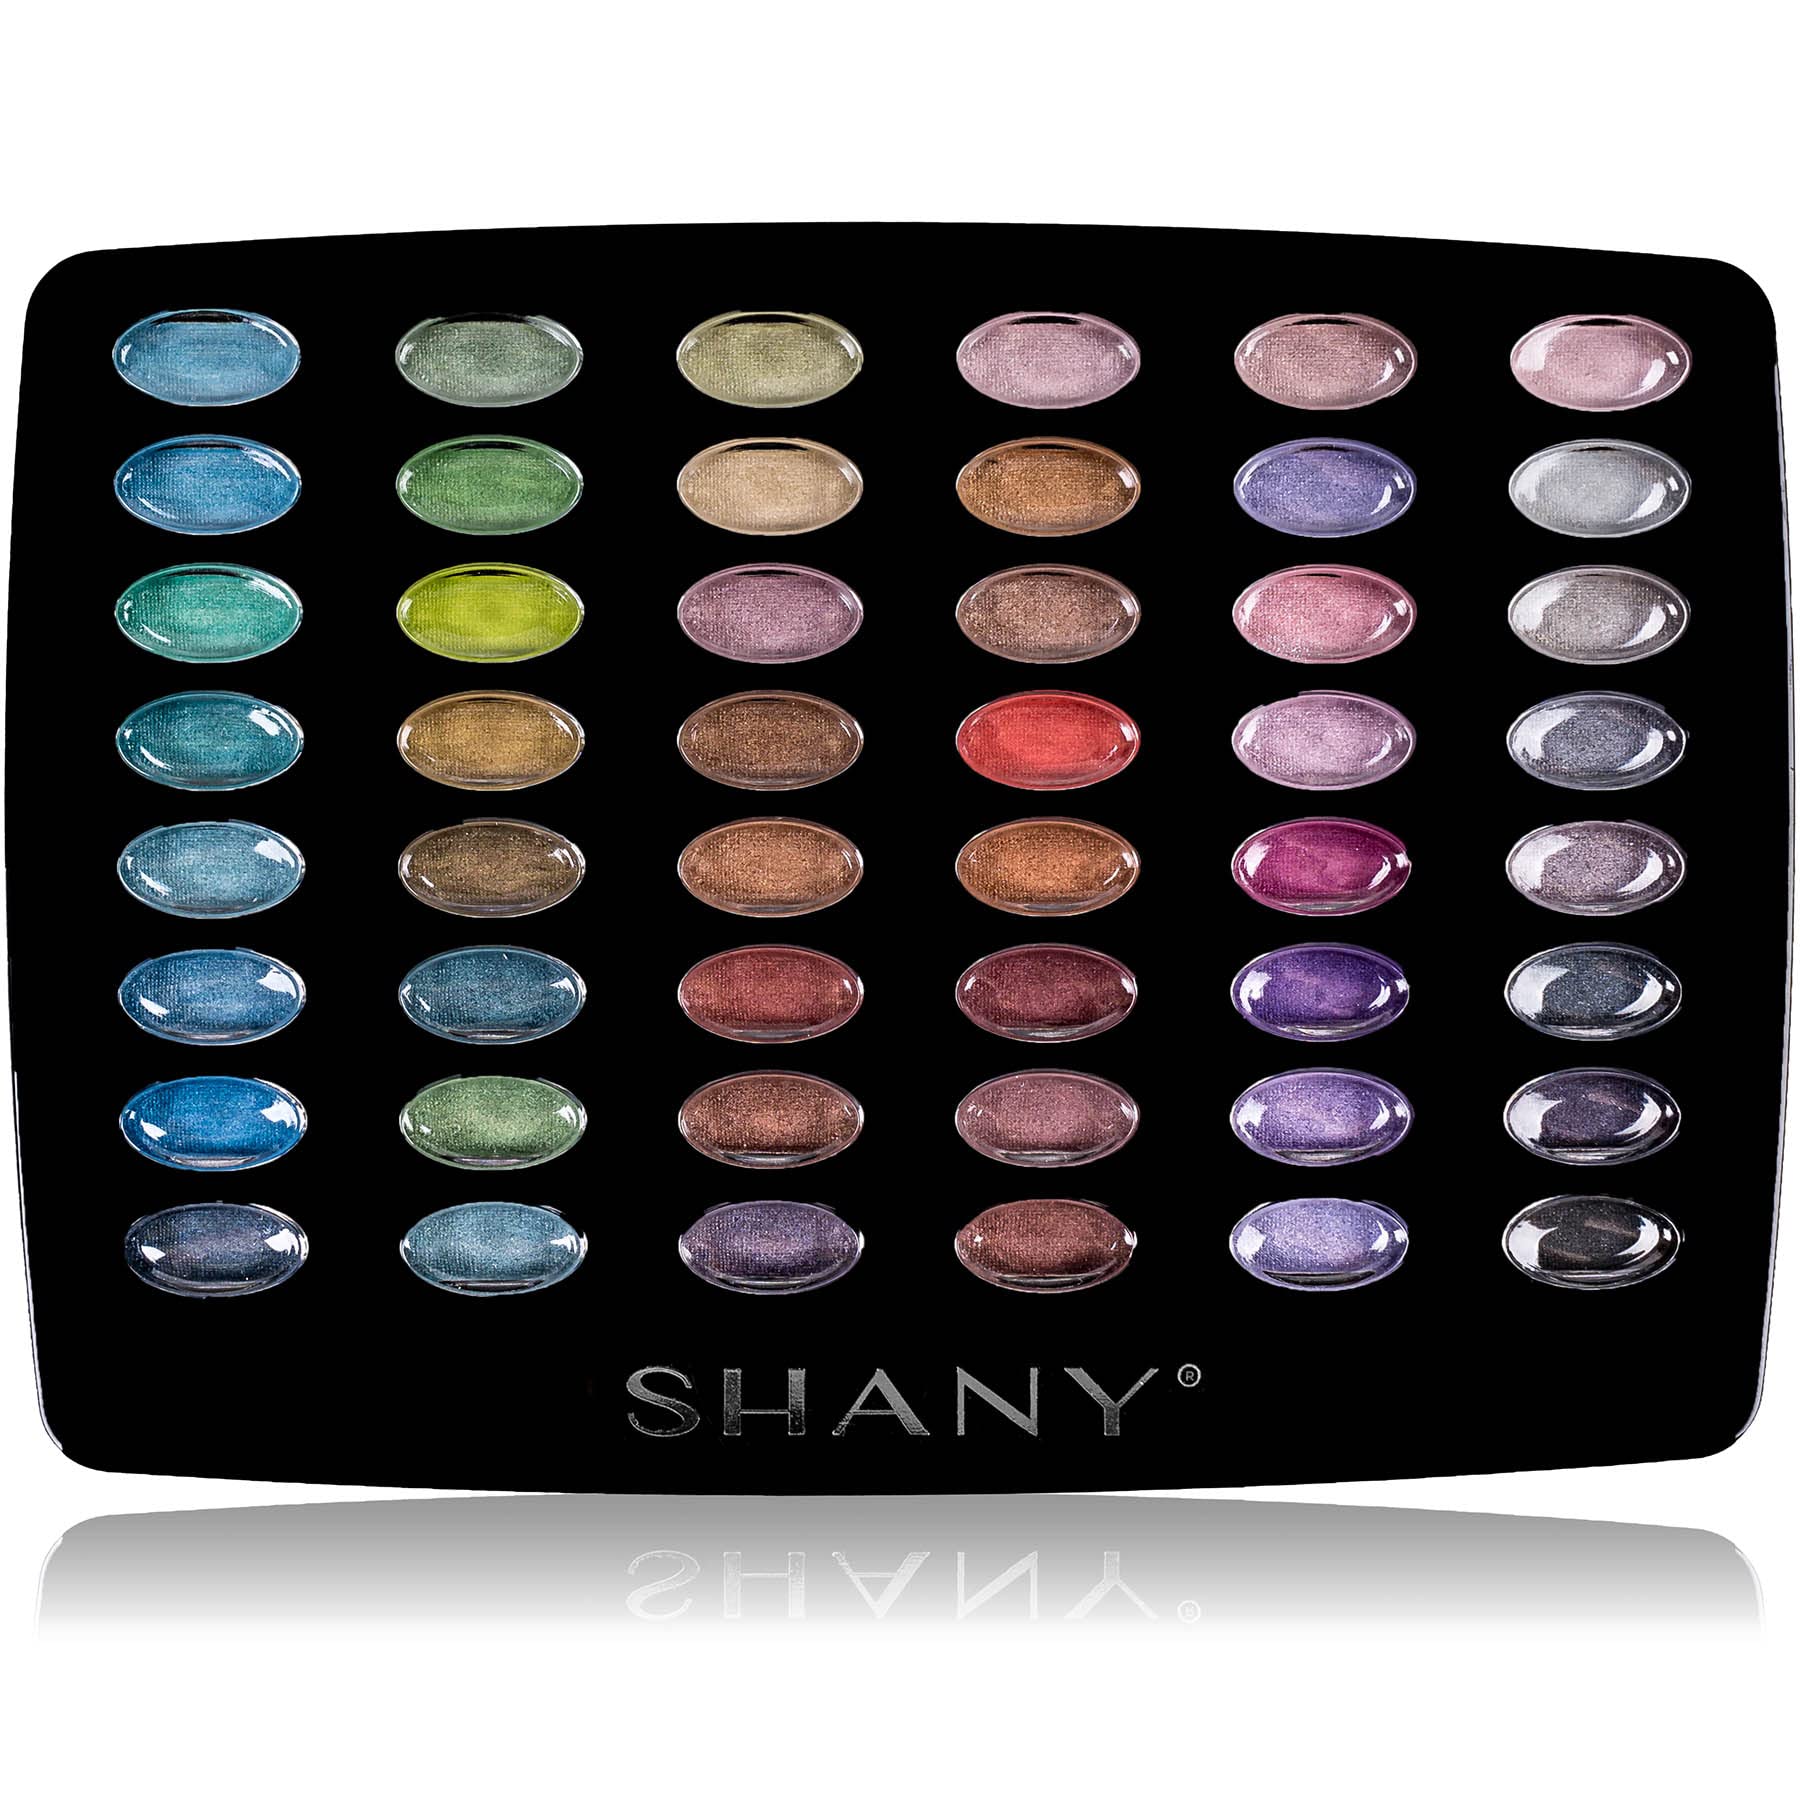 SHANY Glamour Girl Makeup Kit Eye shadow/Blush/Powder - Vintage